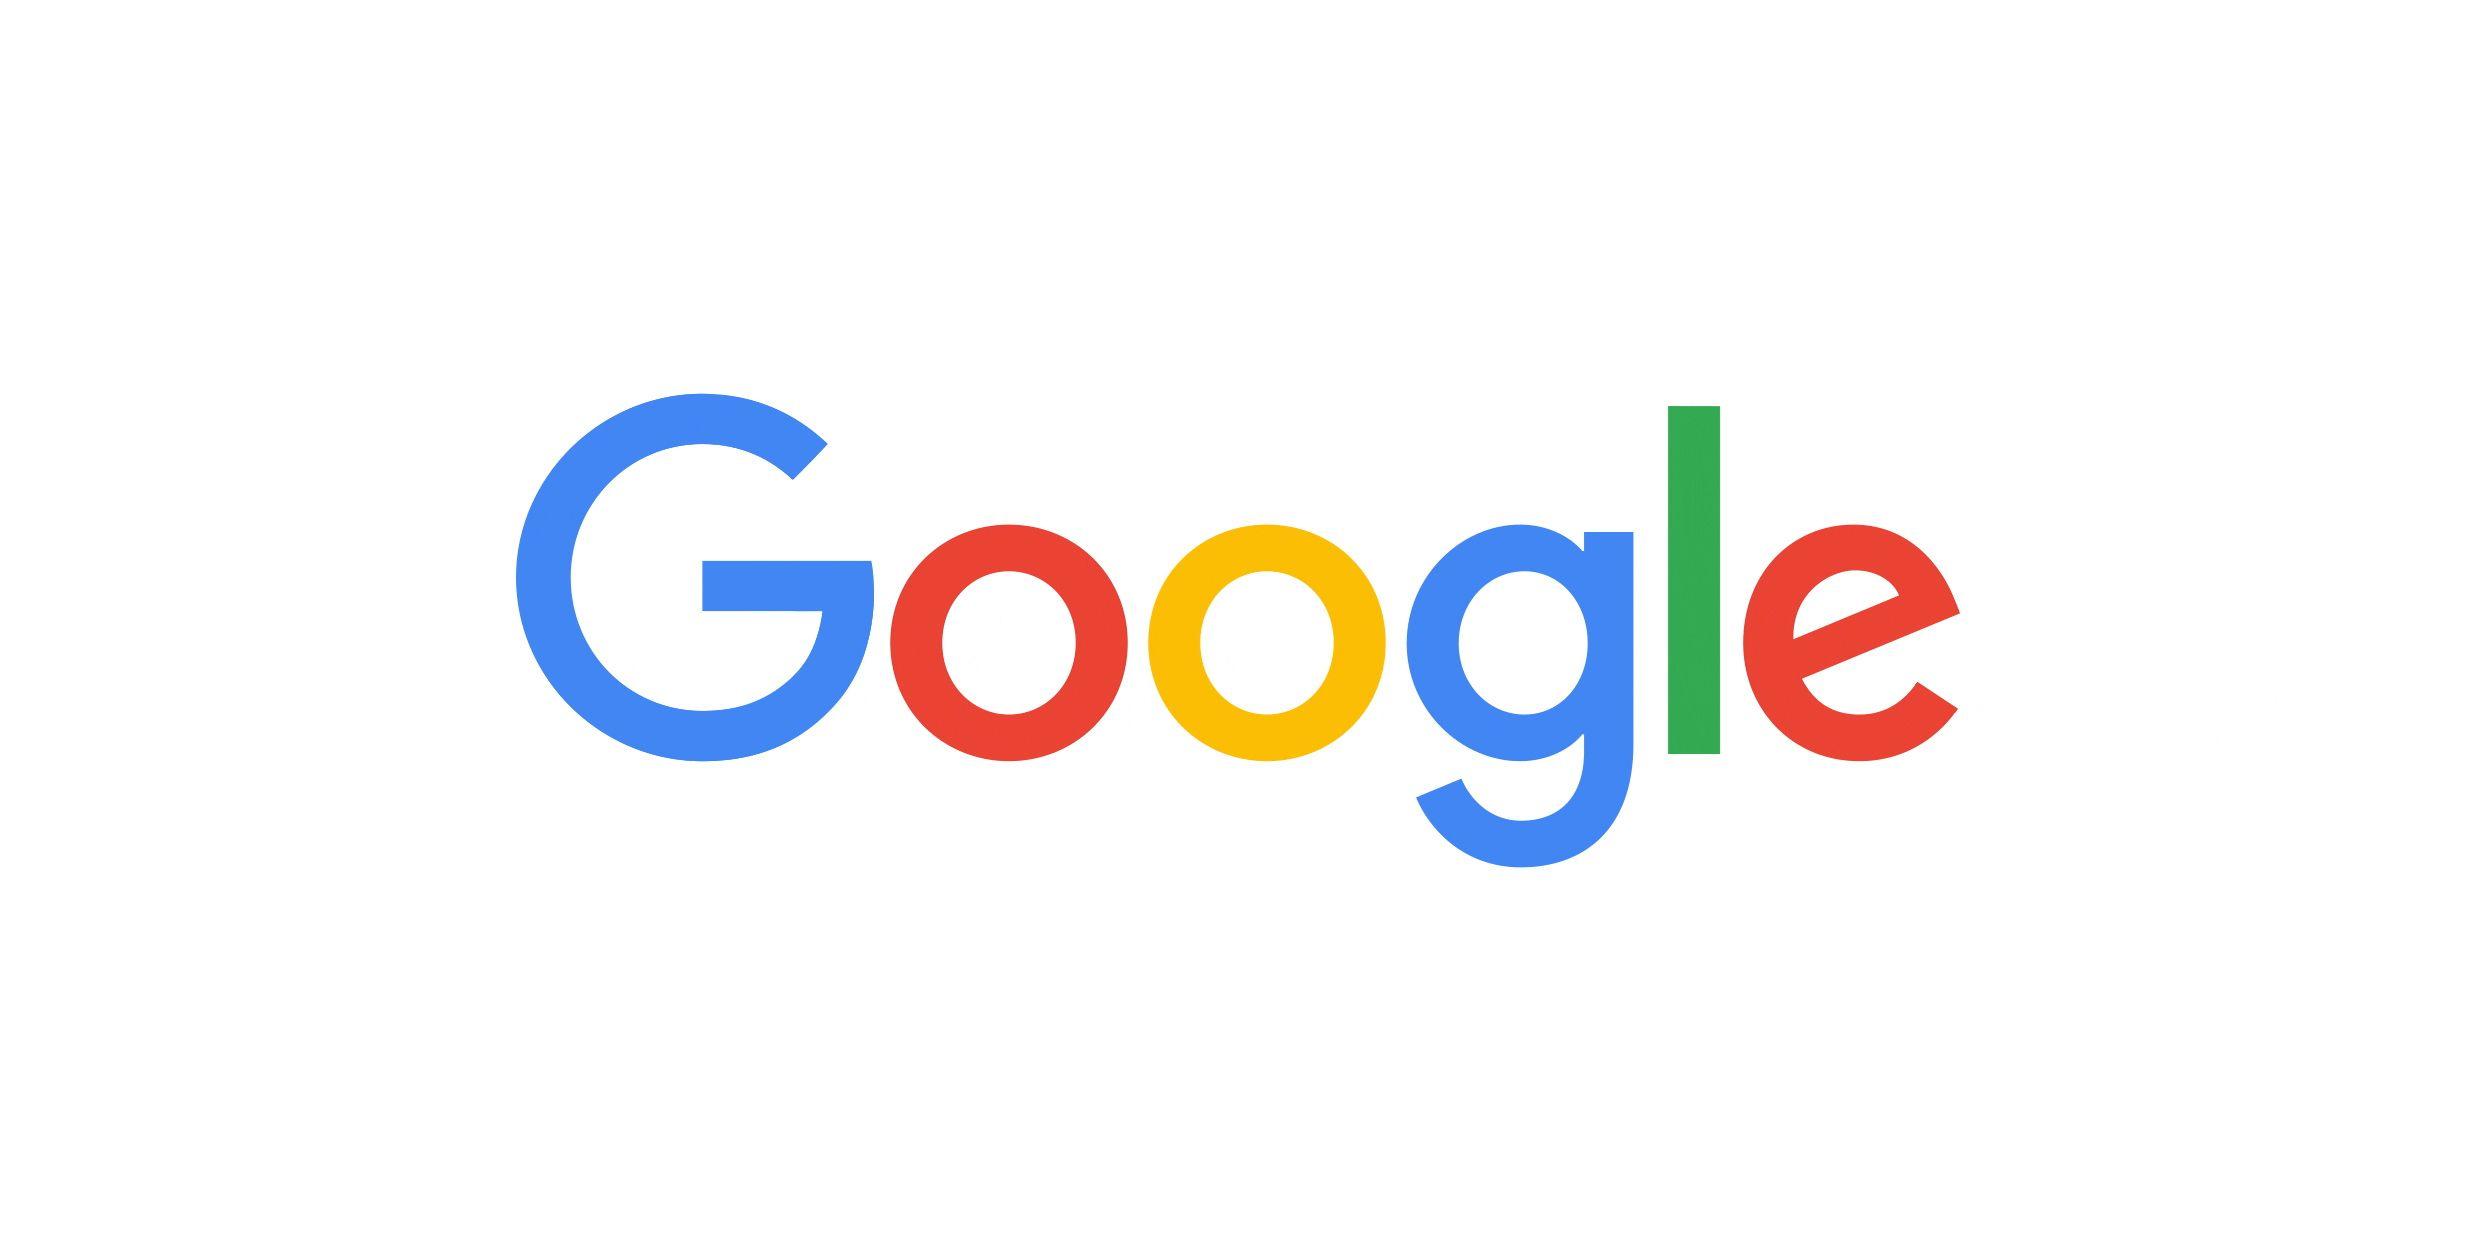 Current Google Logo - Evolving the Google Identity